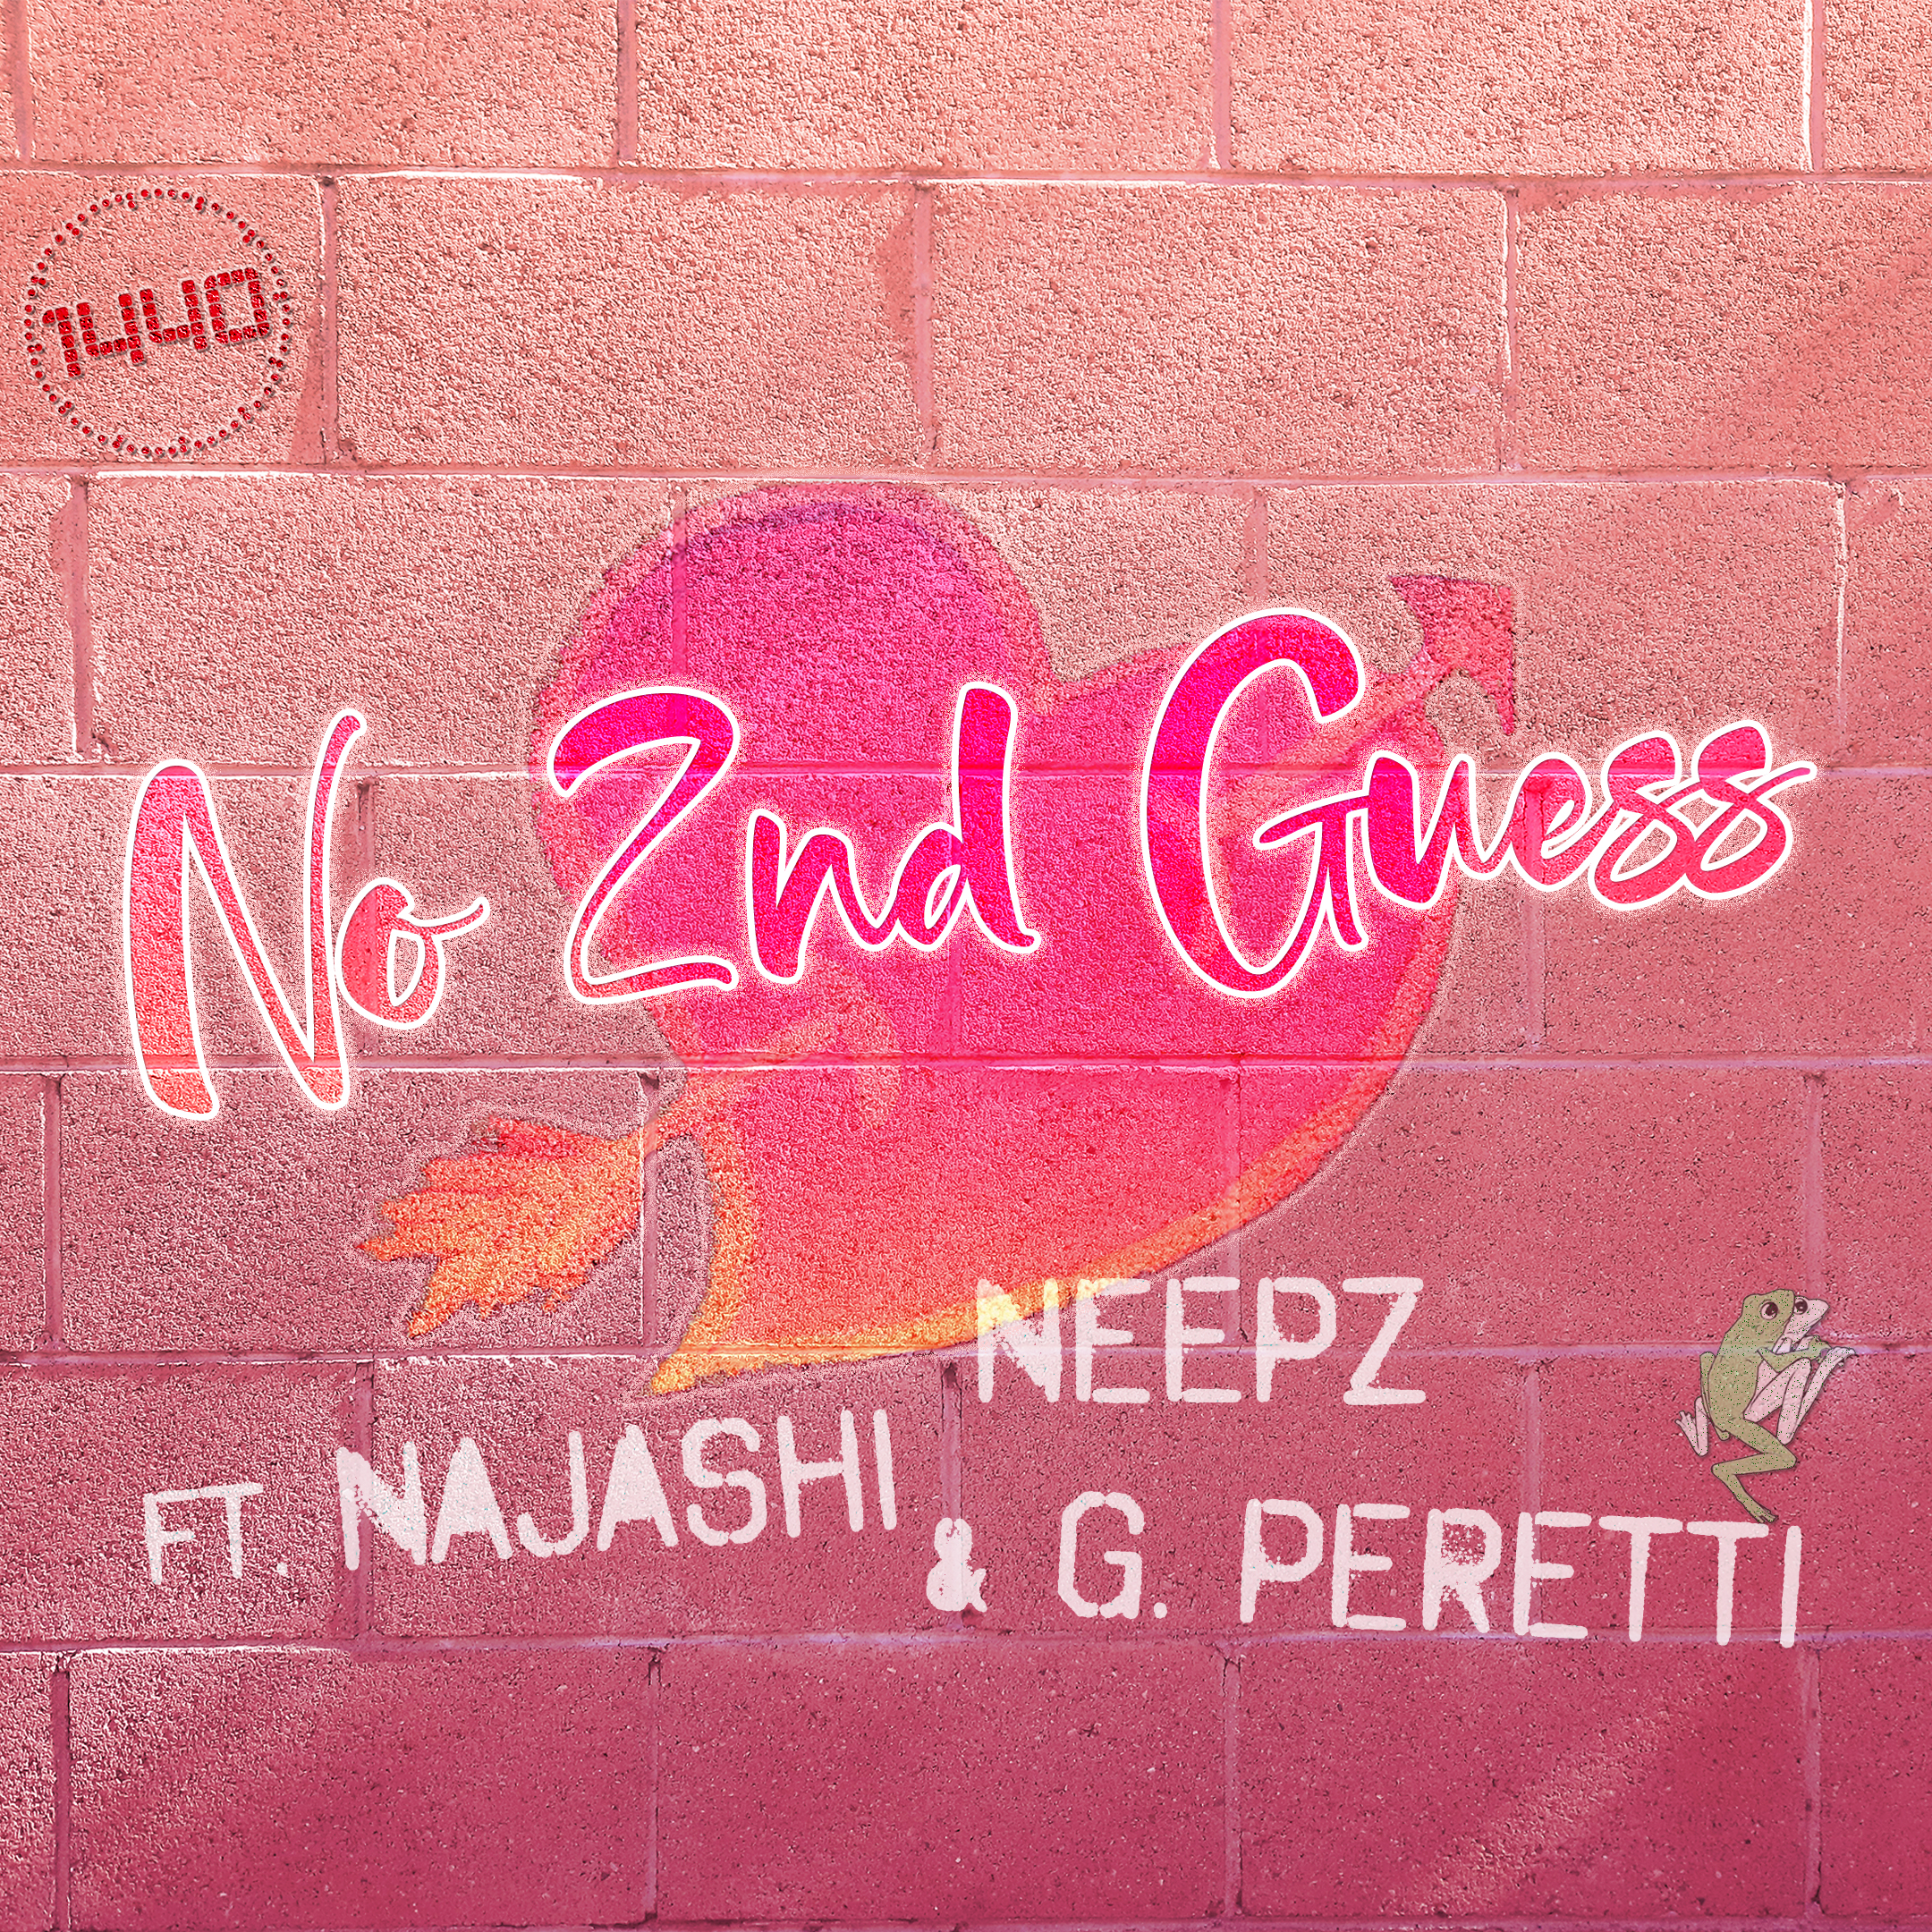 Neepz x Najashi x G. Peretti – “No 2nd Guess”